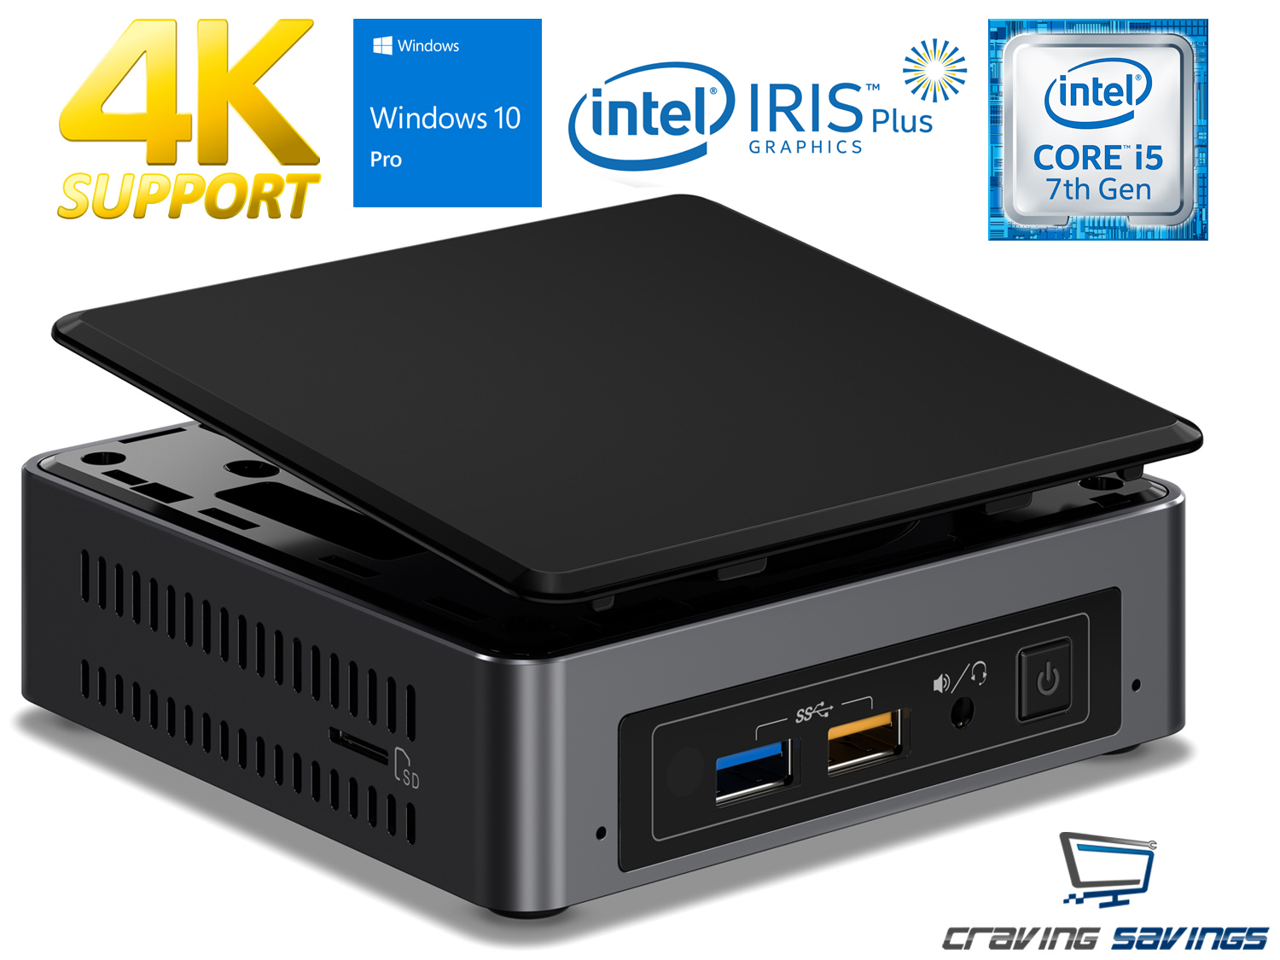 Intel NUC7i5BNK Mini PC, Intel Core i5-7260U 2.2GHz, 4GB DDR4, 128GB SSD, Wifi, BT 4.2, HDMI, Thunderbolt 3, 4k Support, Dual Monitor Capable, Windows 10 Pro